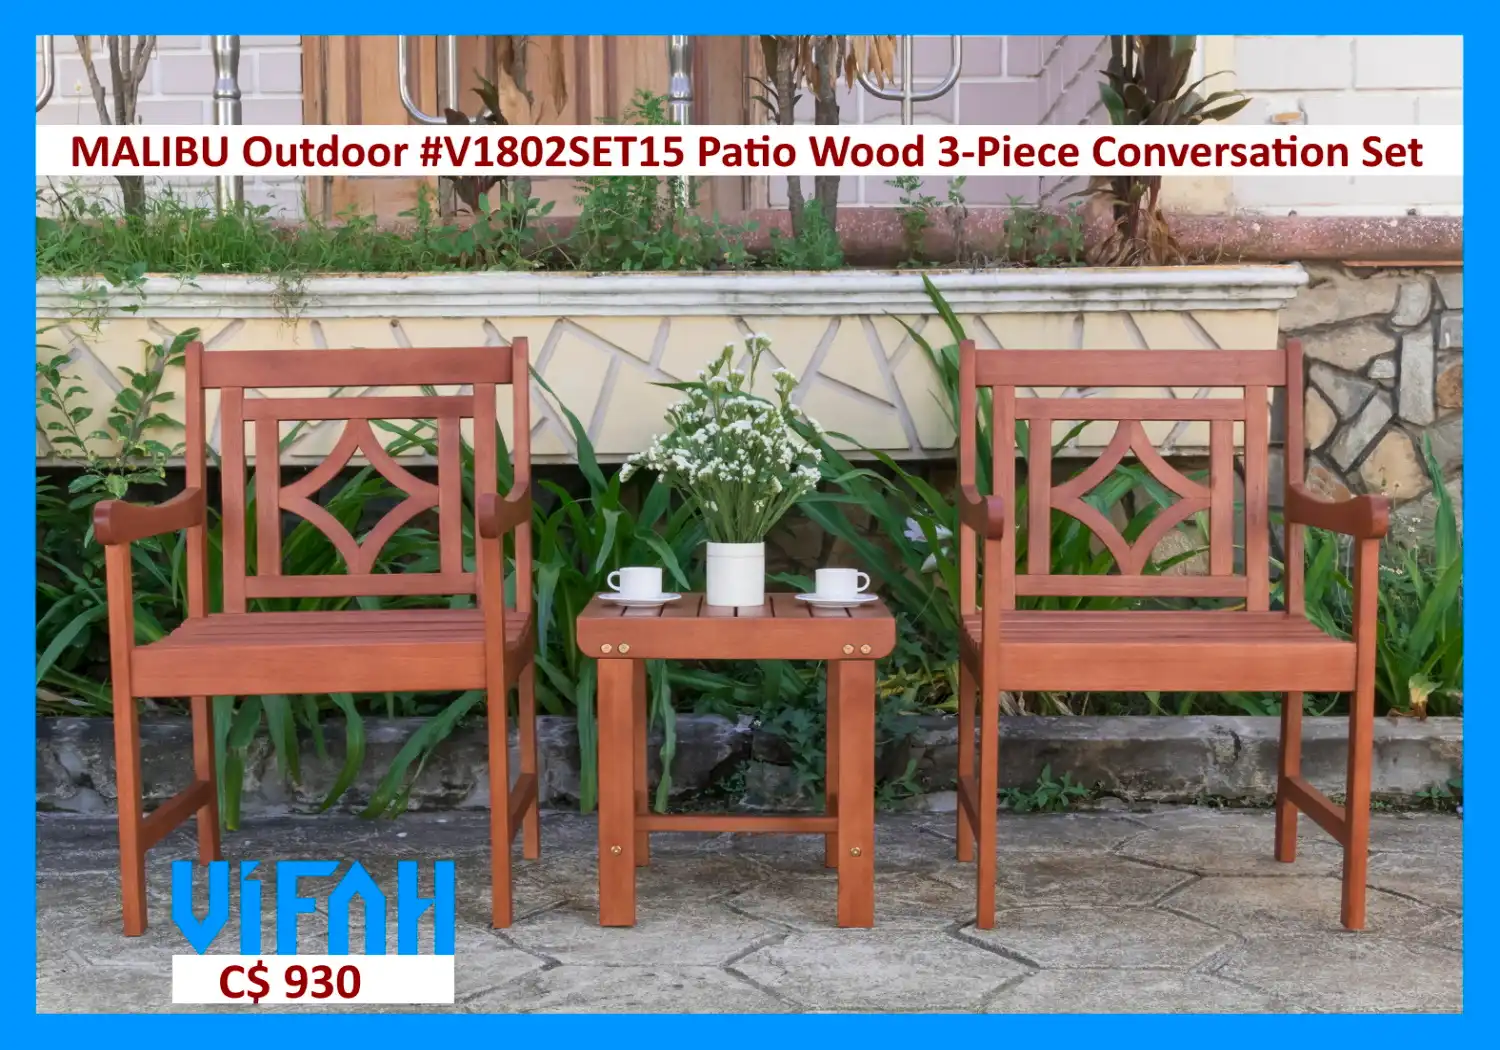 MALIBU Outdoor #V1802SET15 Patio Wood 3-Piece Conversation Set